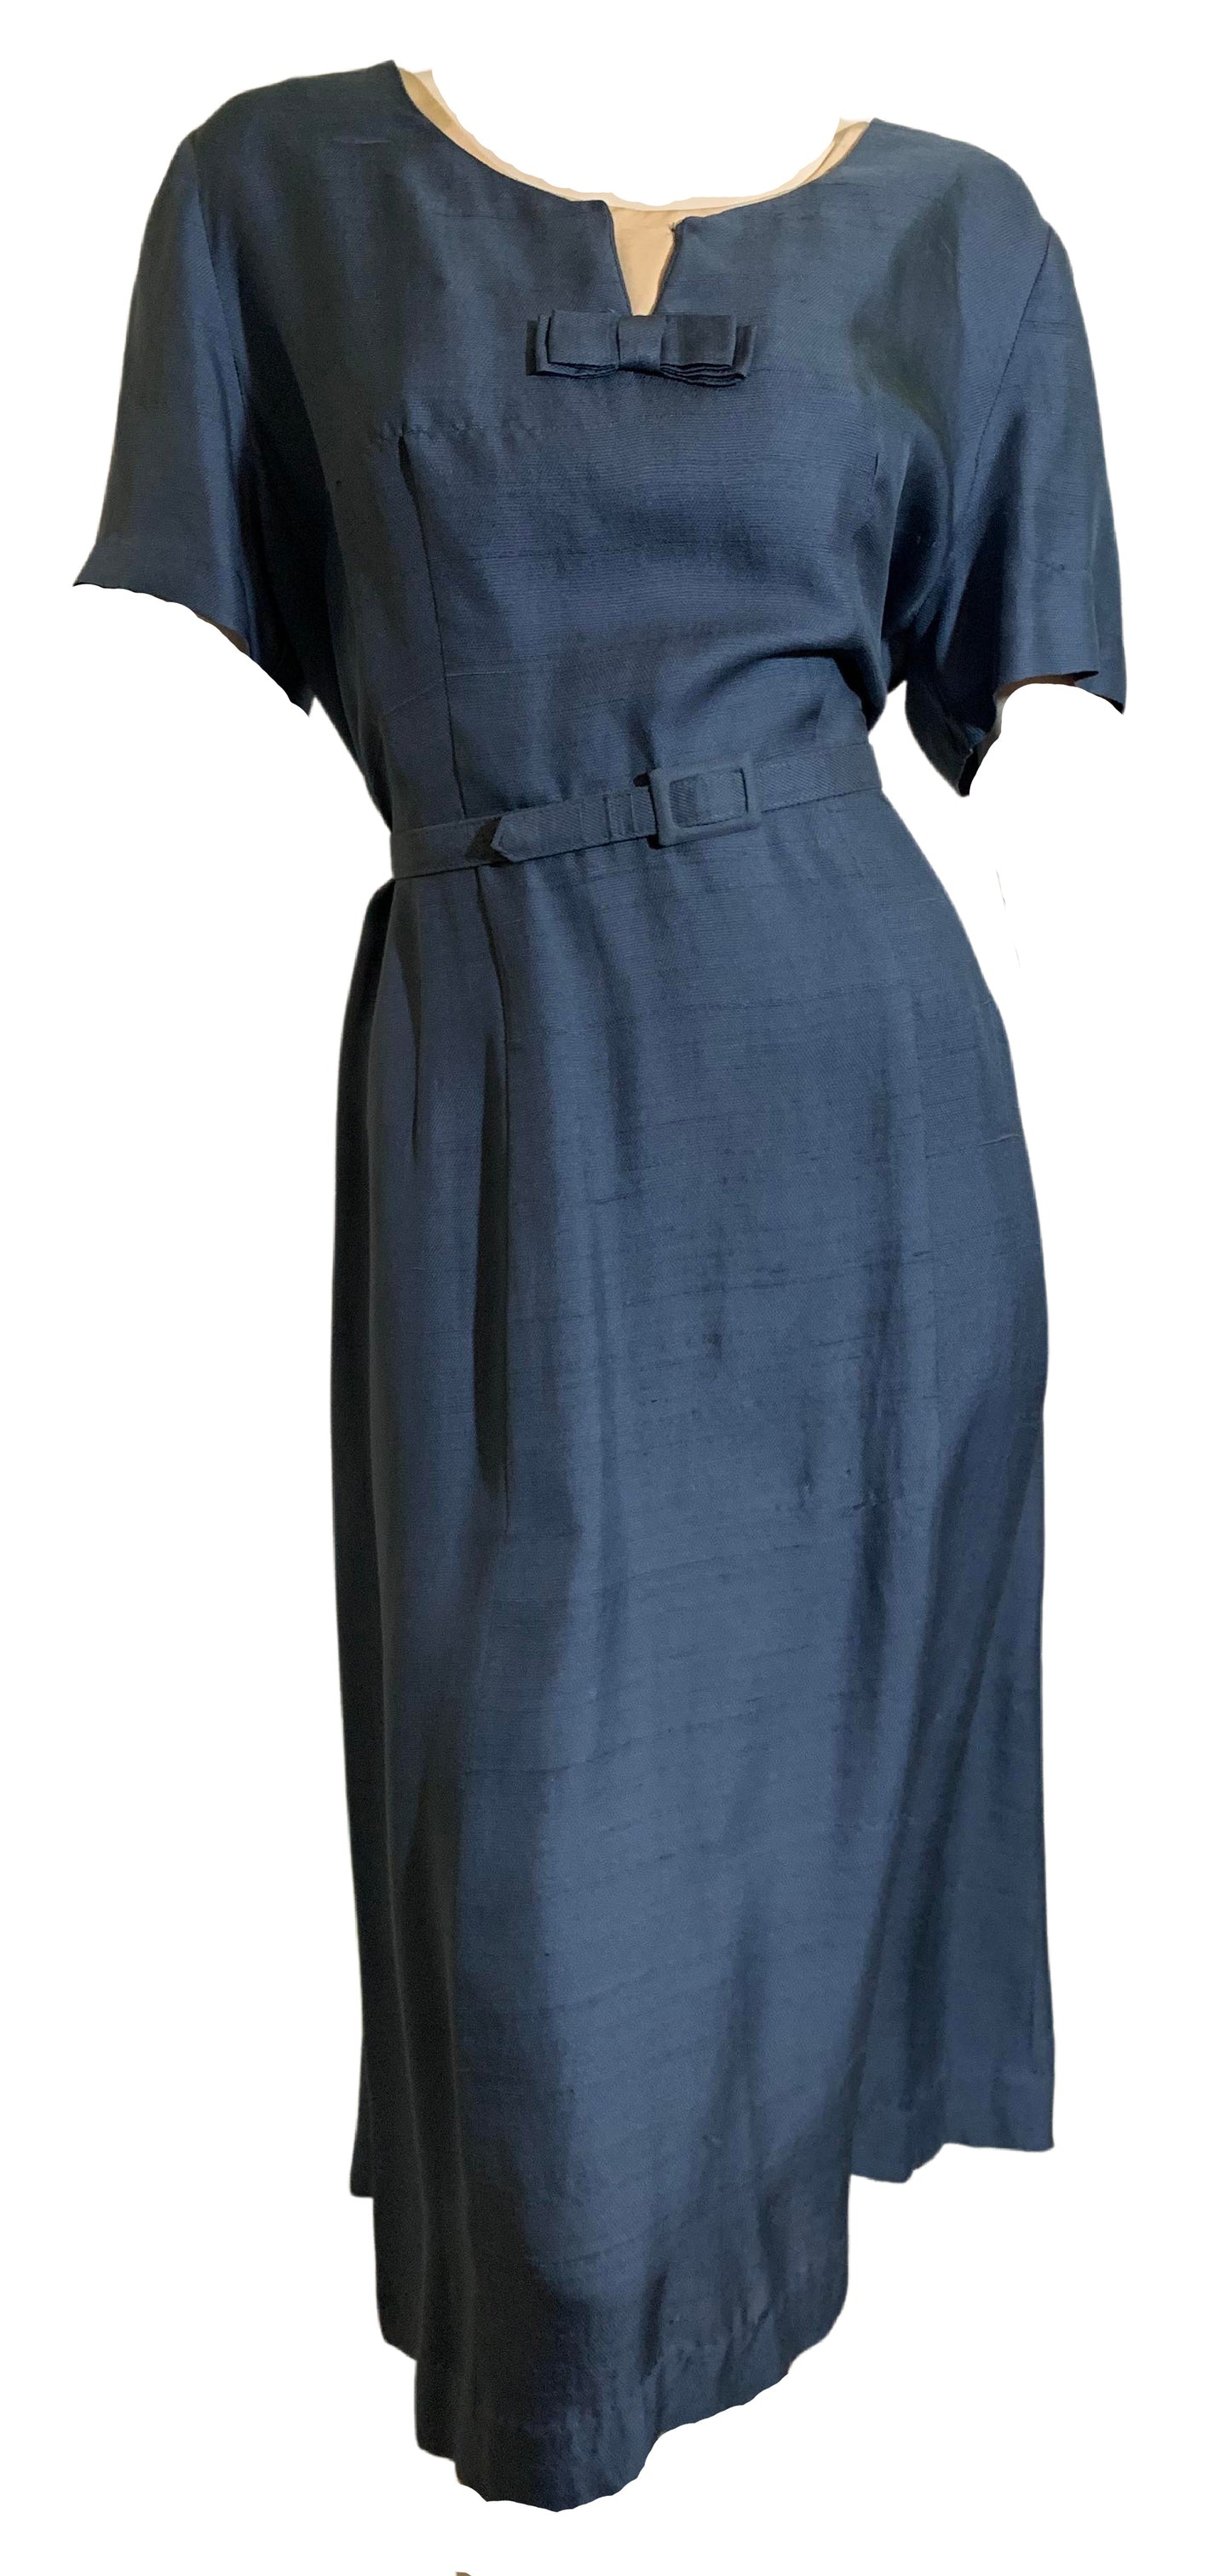 Dusky Blue Silk Day Dress circa 1960s